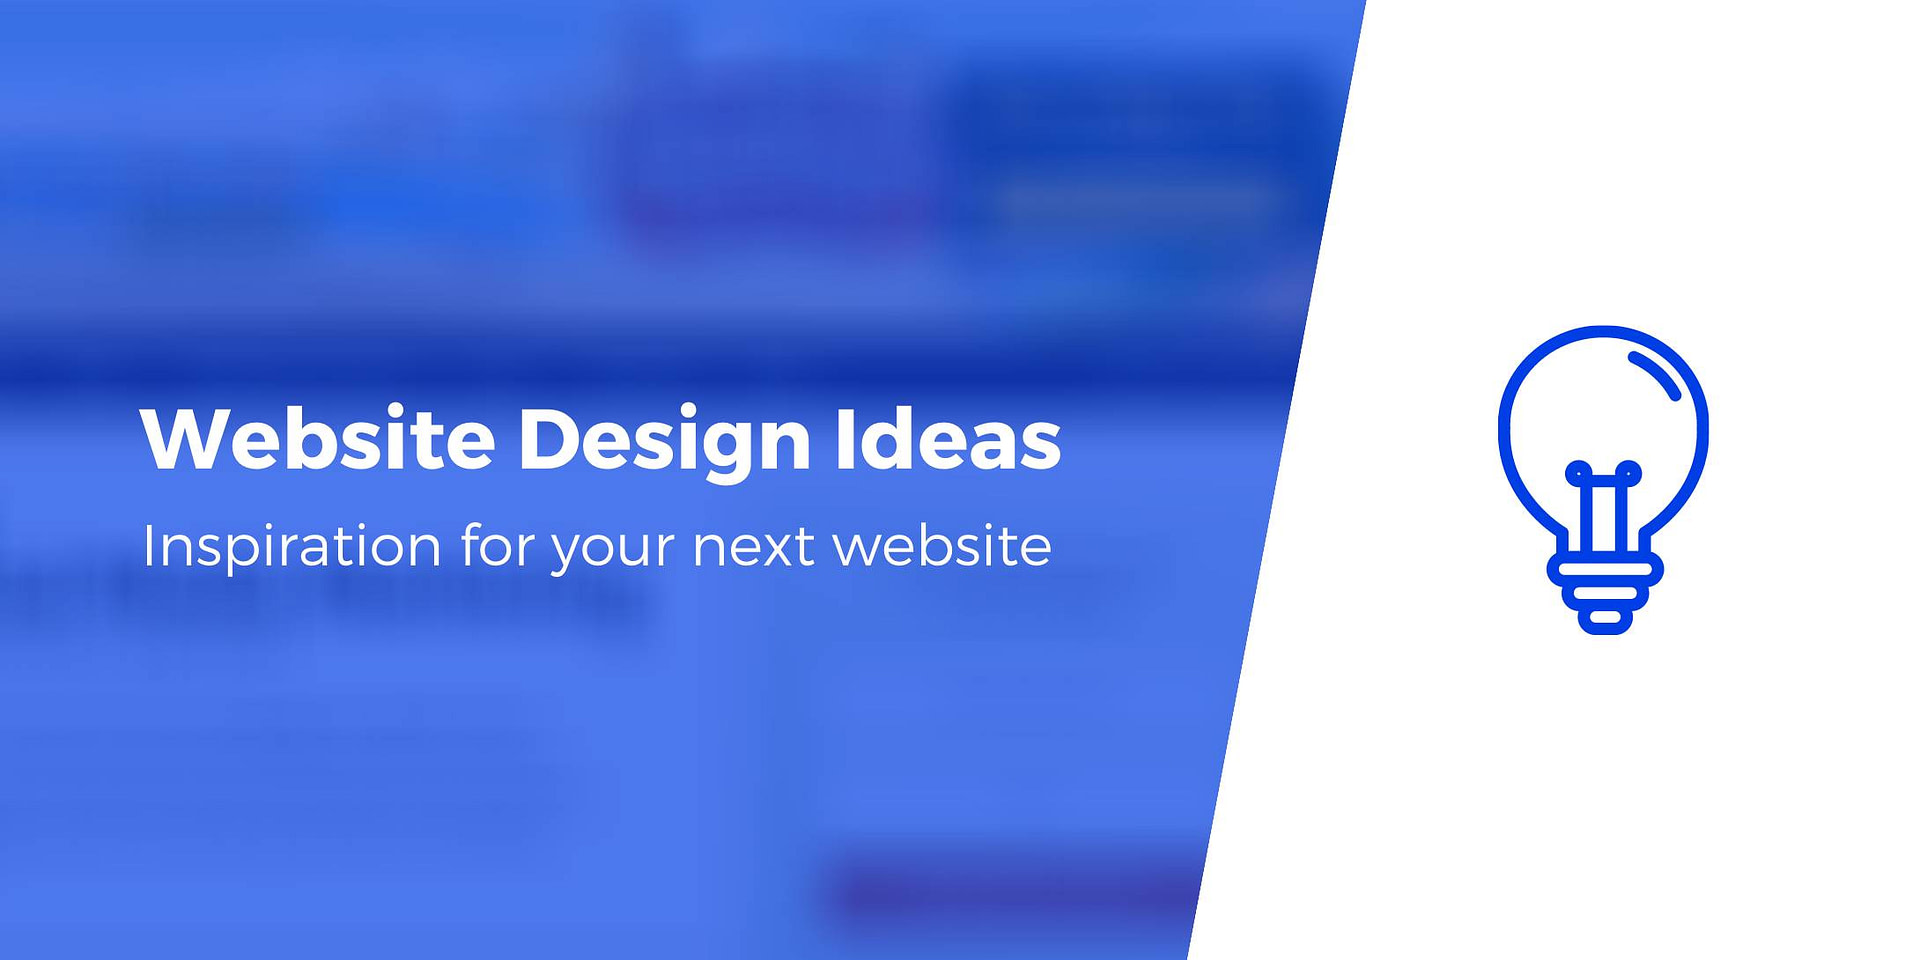 website ideas